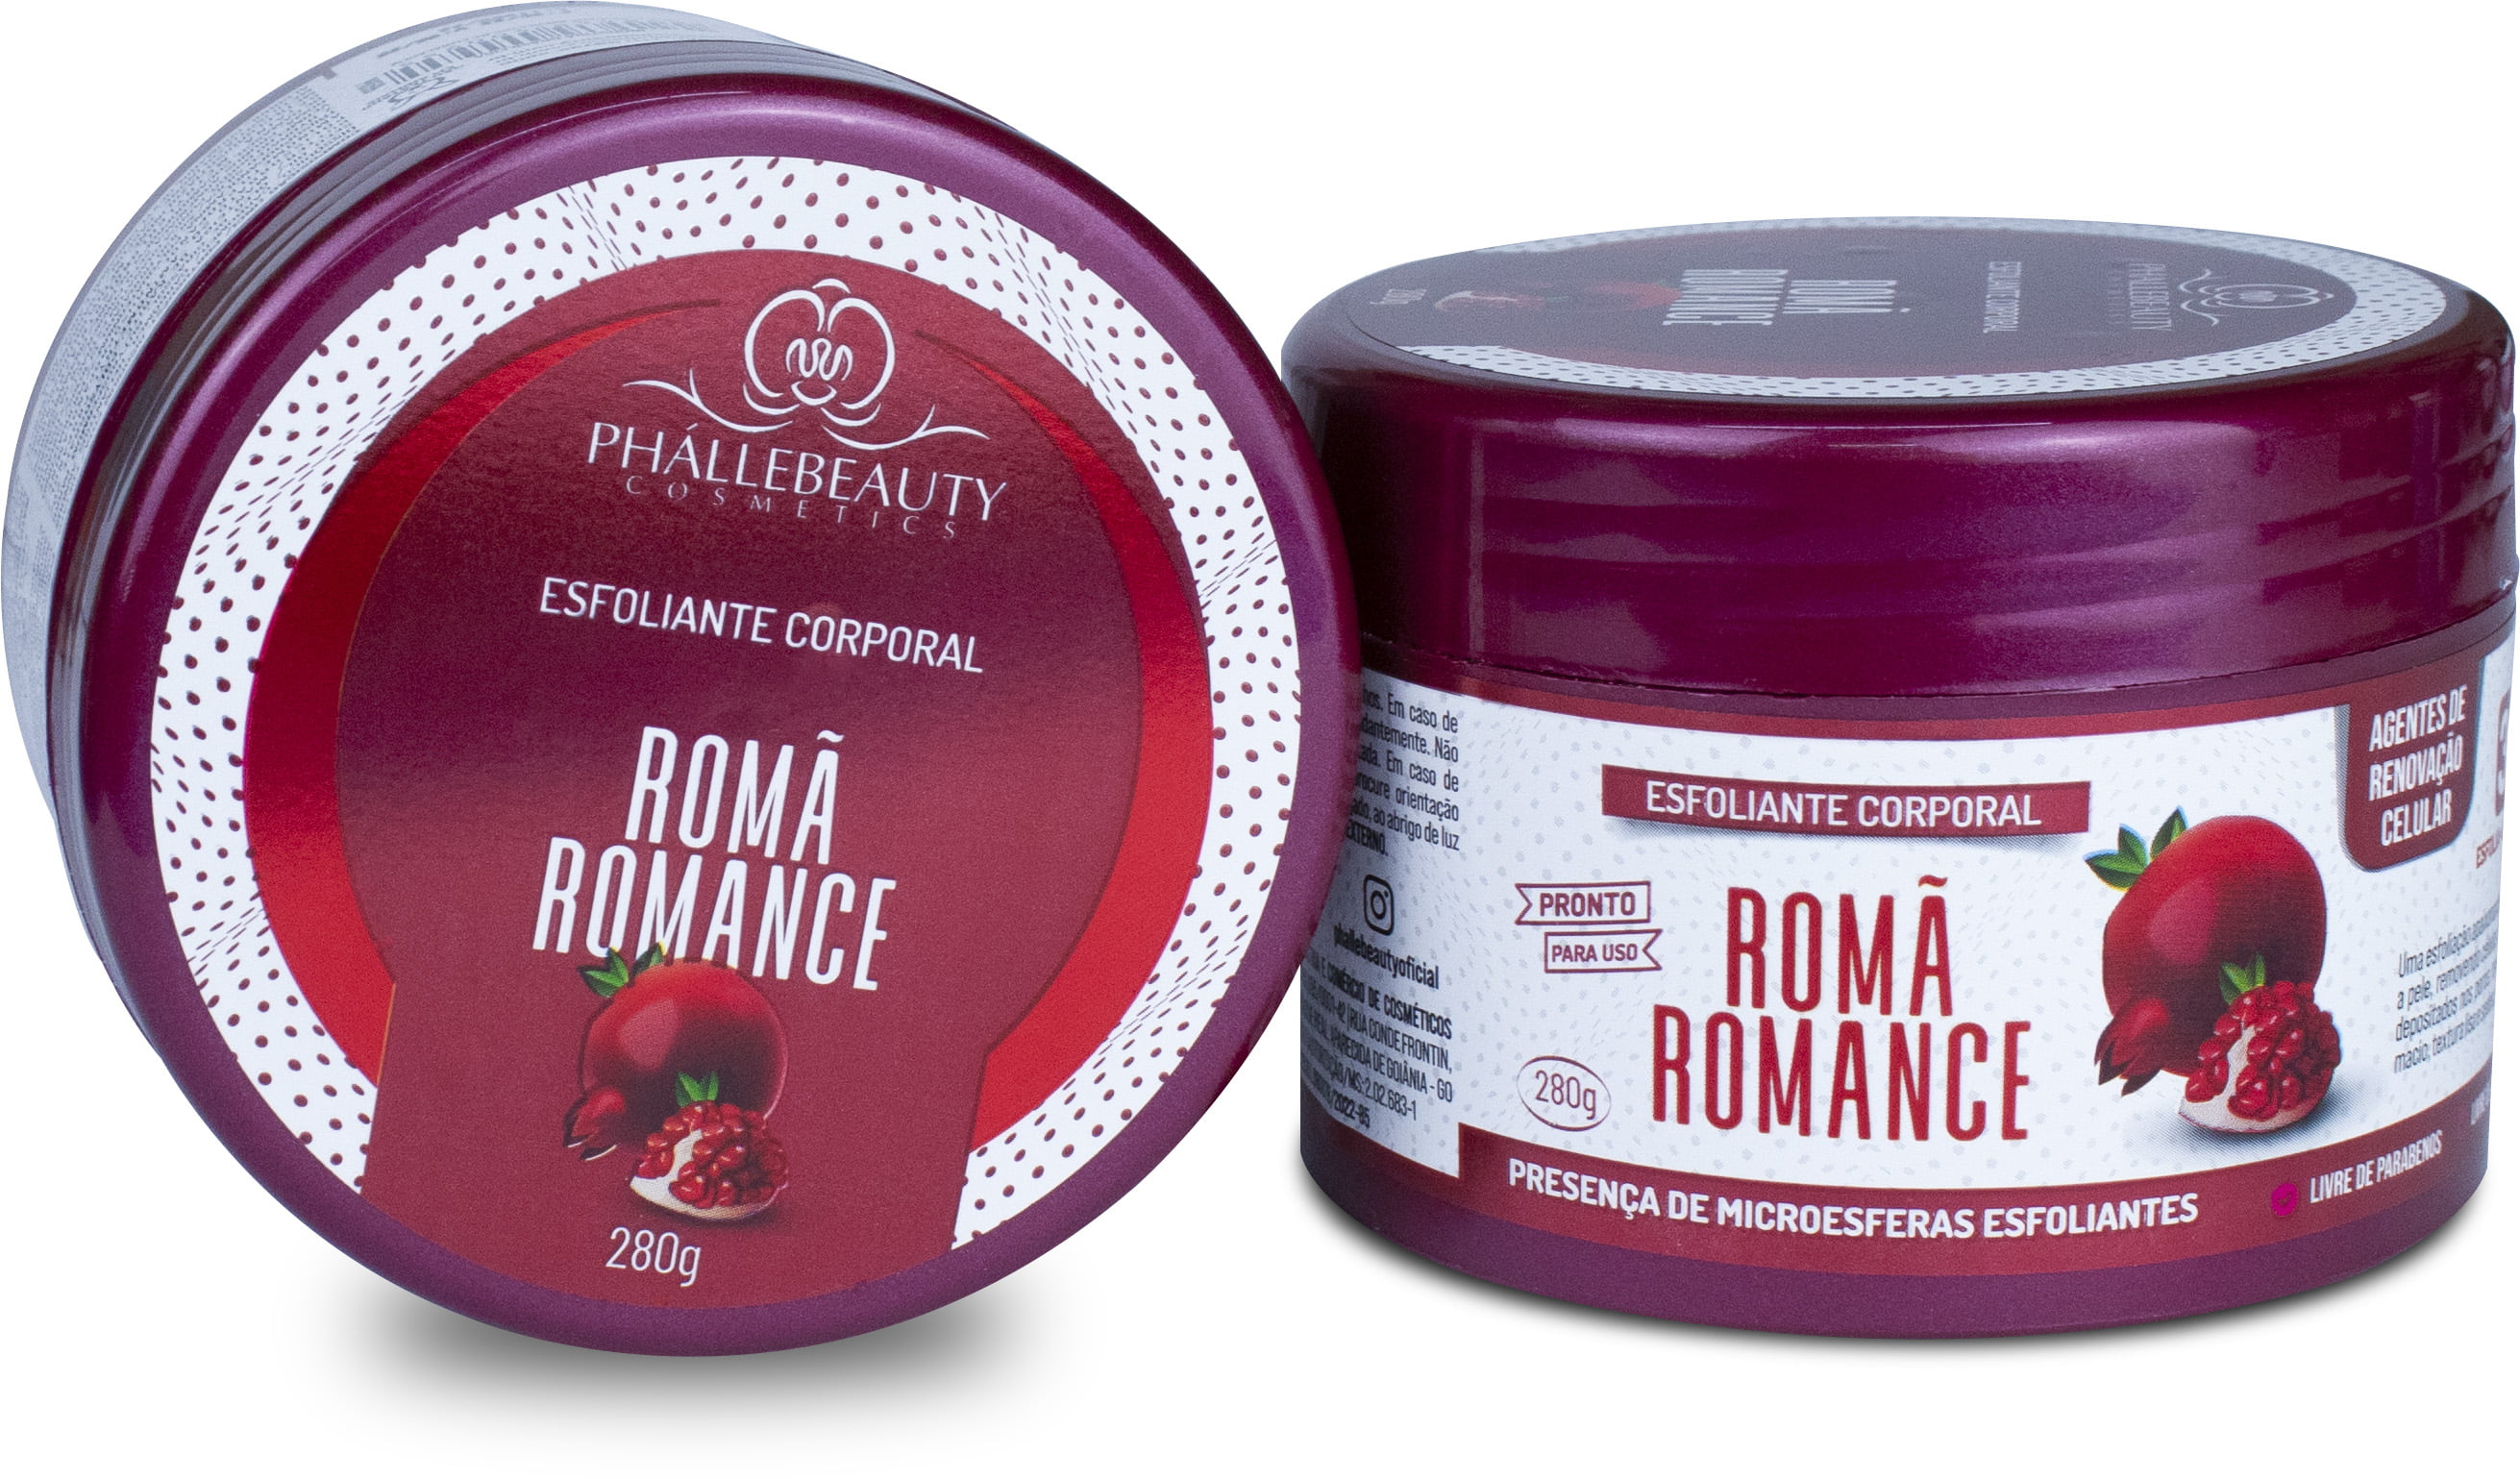 Esfoliante Romã Romance 280g